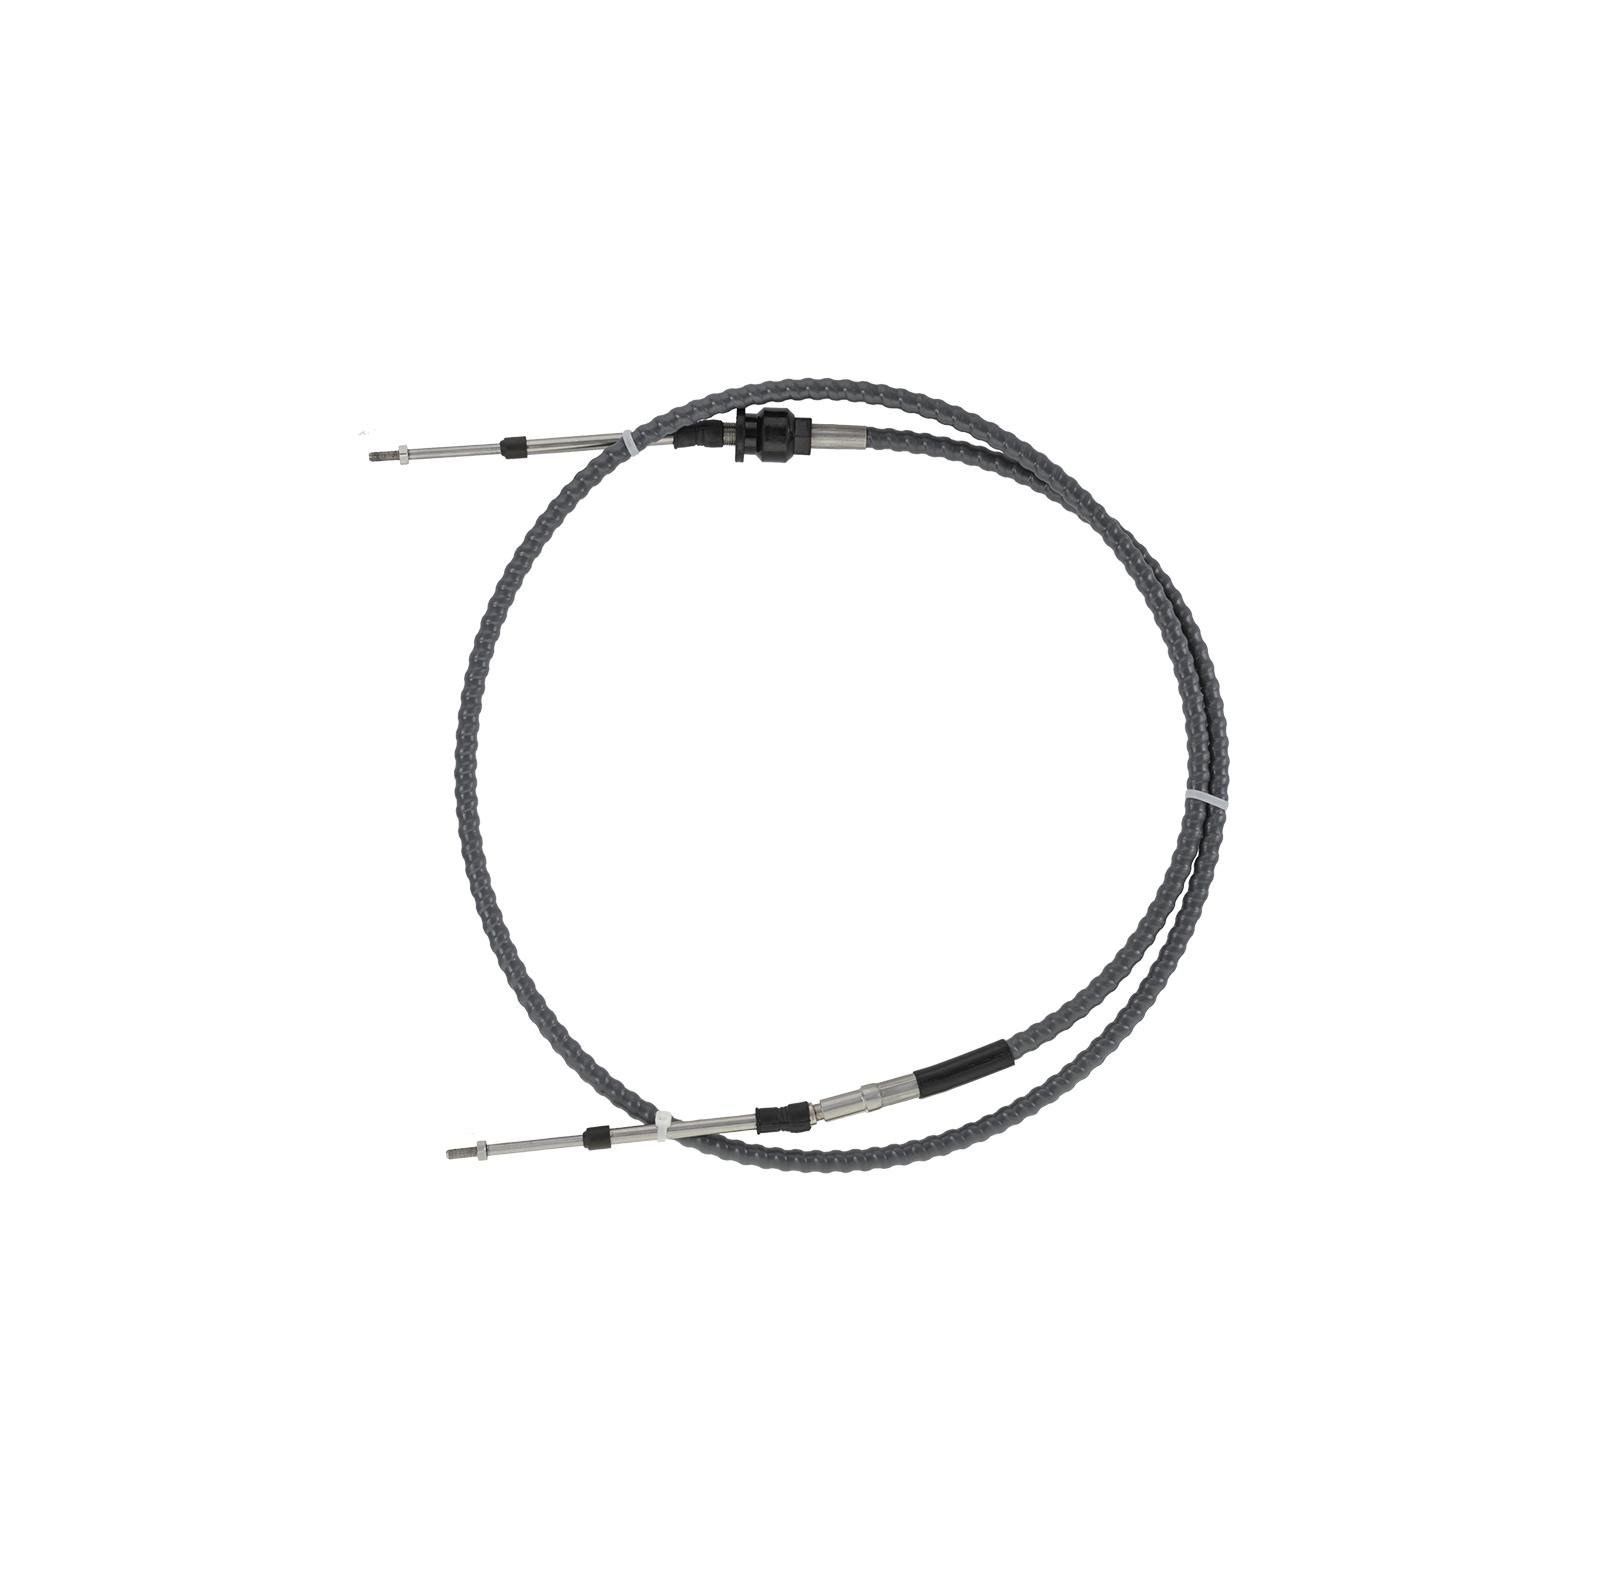 Steering Cable for Sea-Doo GTX DI/ GTX 4-TEC/ RXT/ WAKE PRO/ GTI/ GTR/ GTS/  RXP-X